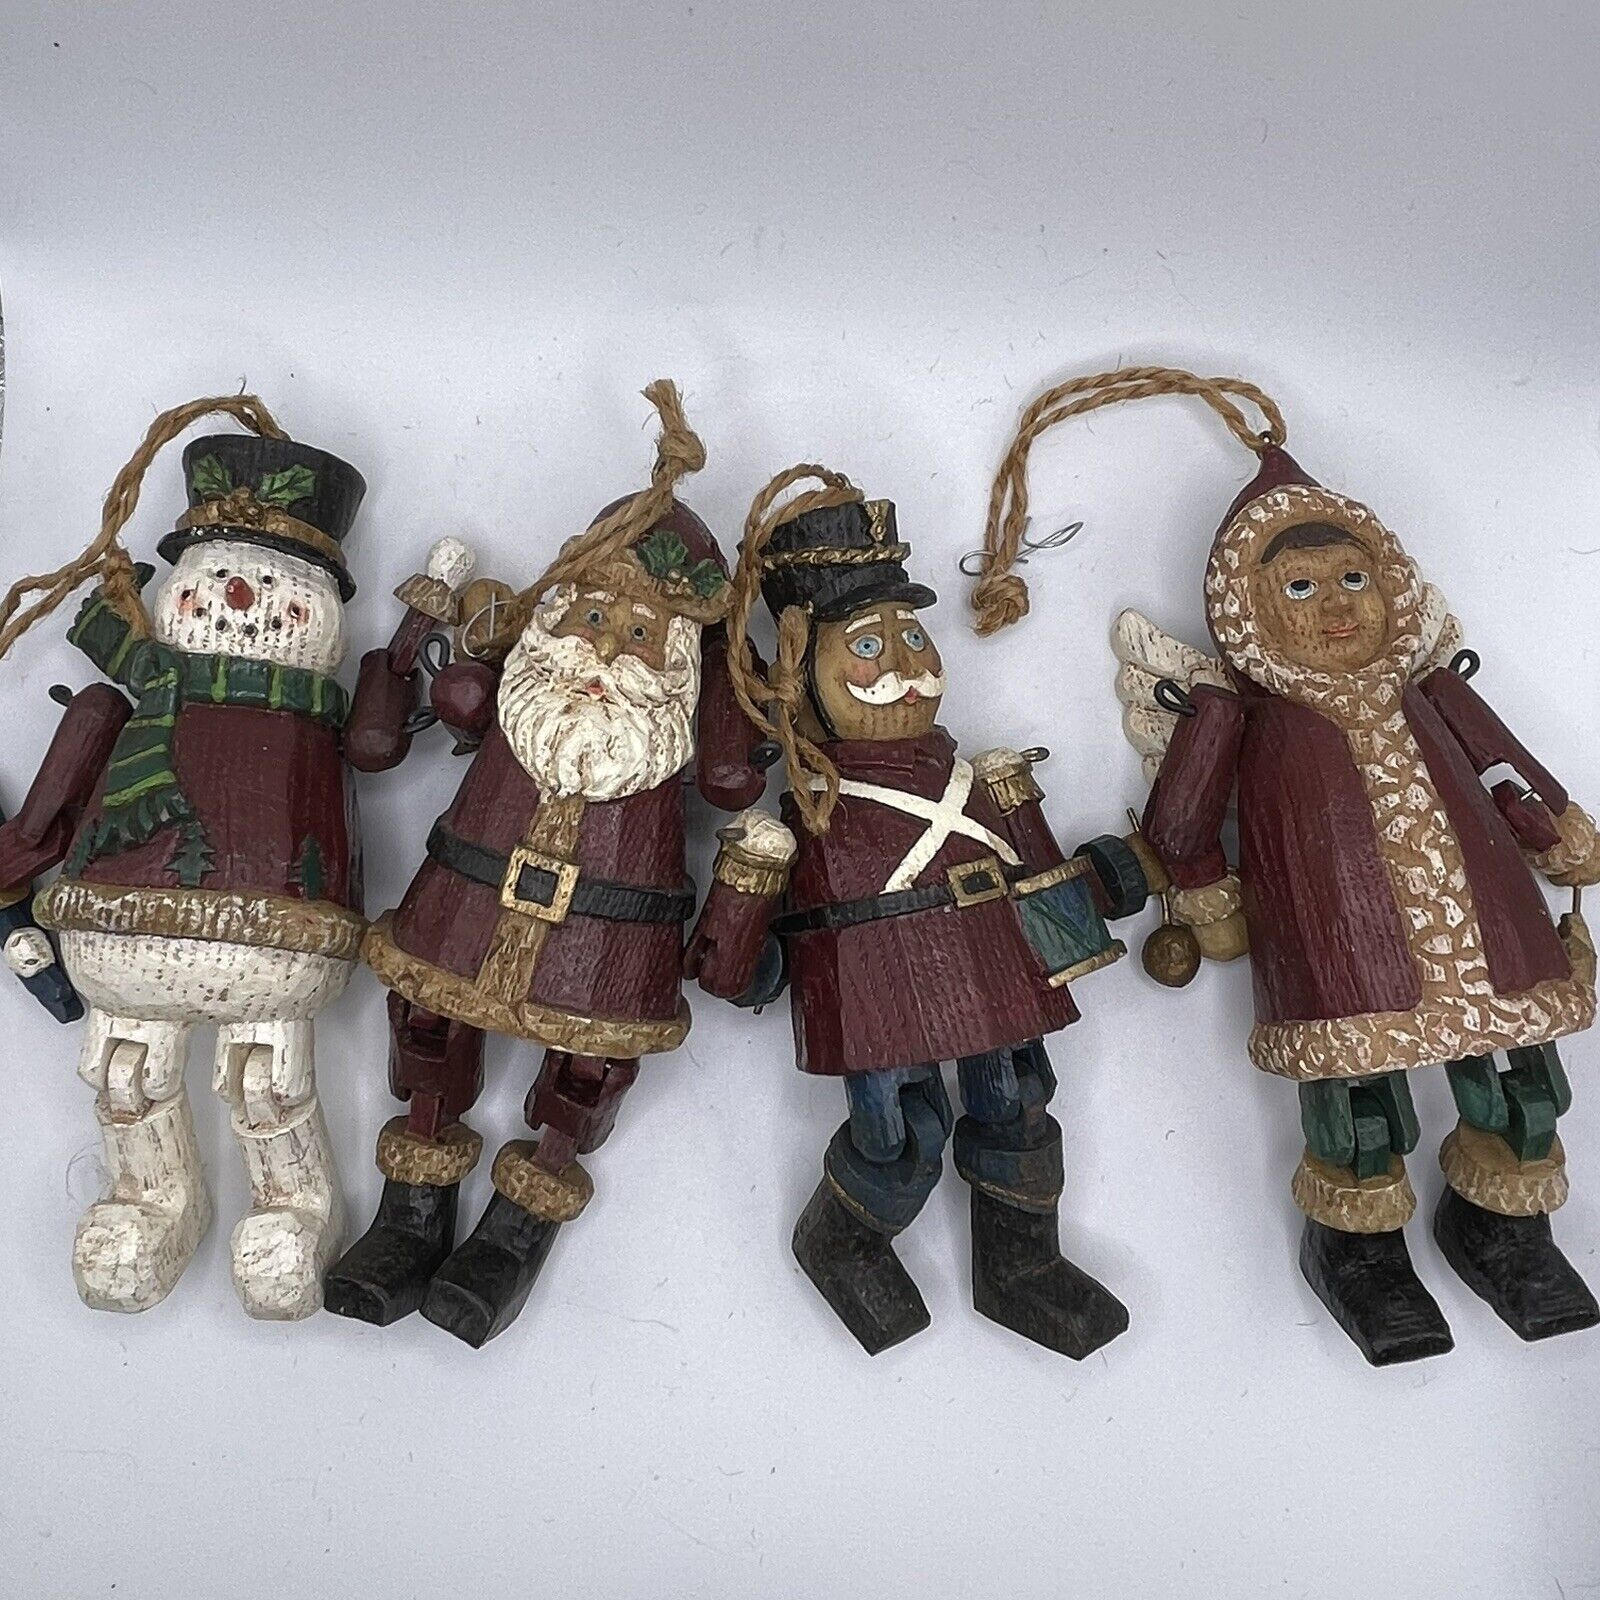 4 Rustic Christmas Ornaments Jointed Resin Snowman, Santa, Angel, Drummer 5.5”